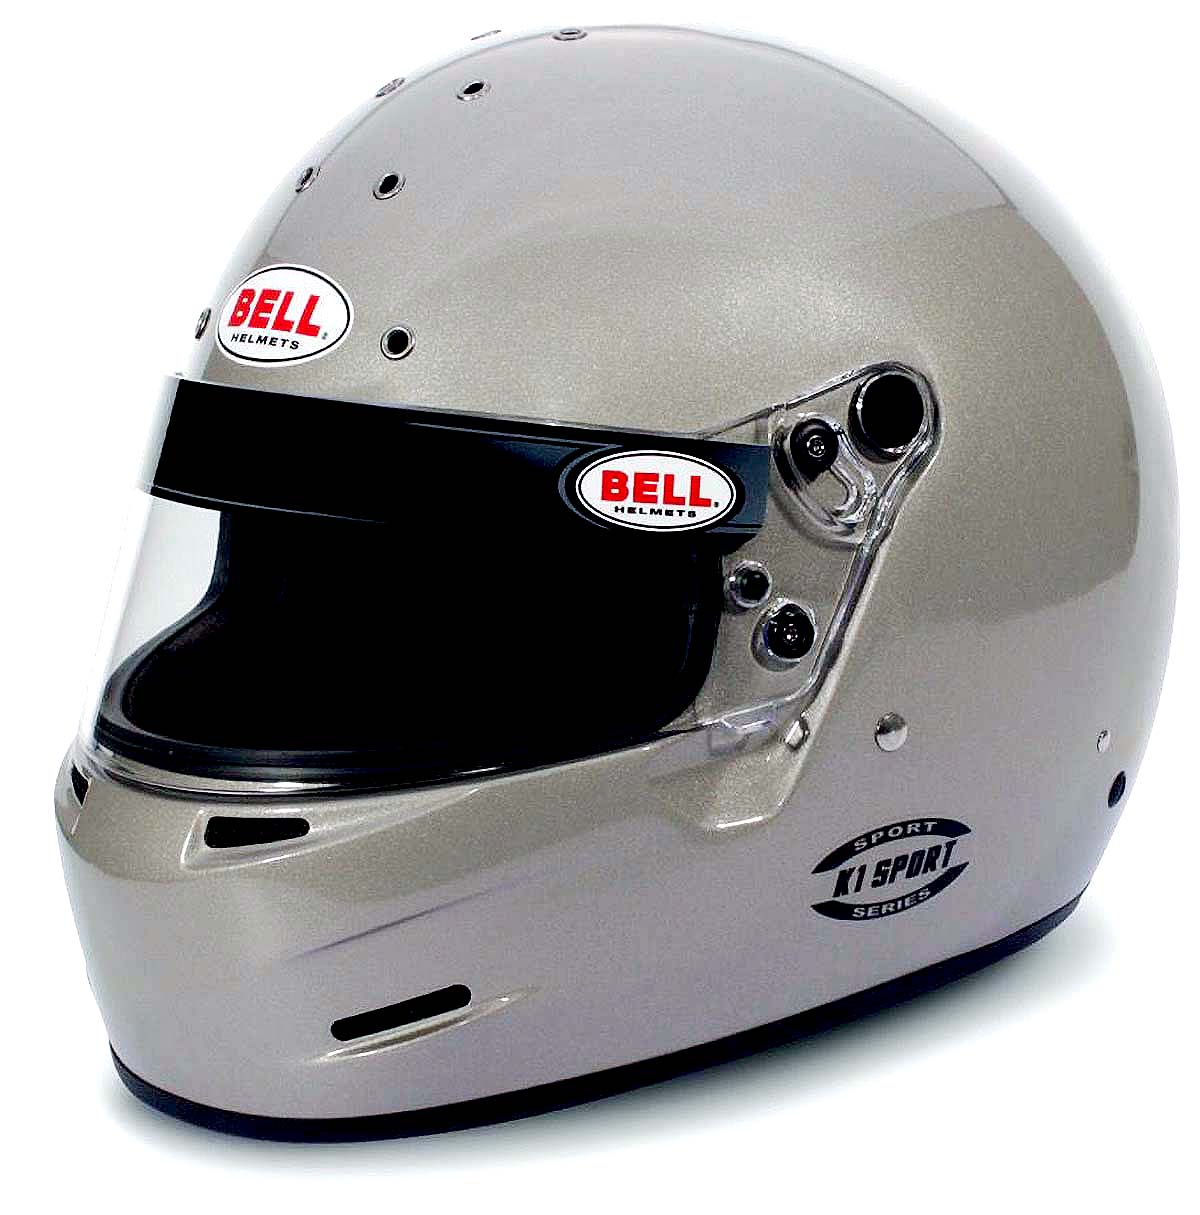 Stunning Bell k1 sport titanium Helmet SA2020 Image Gallery